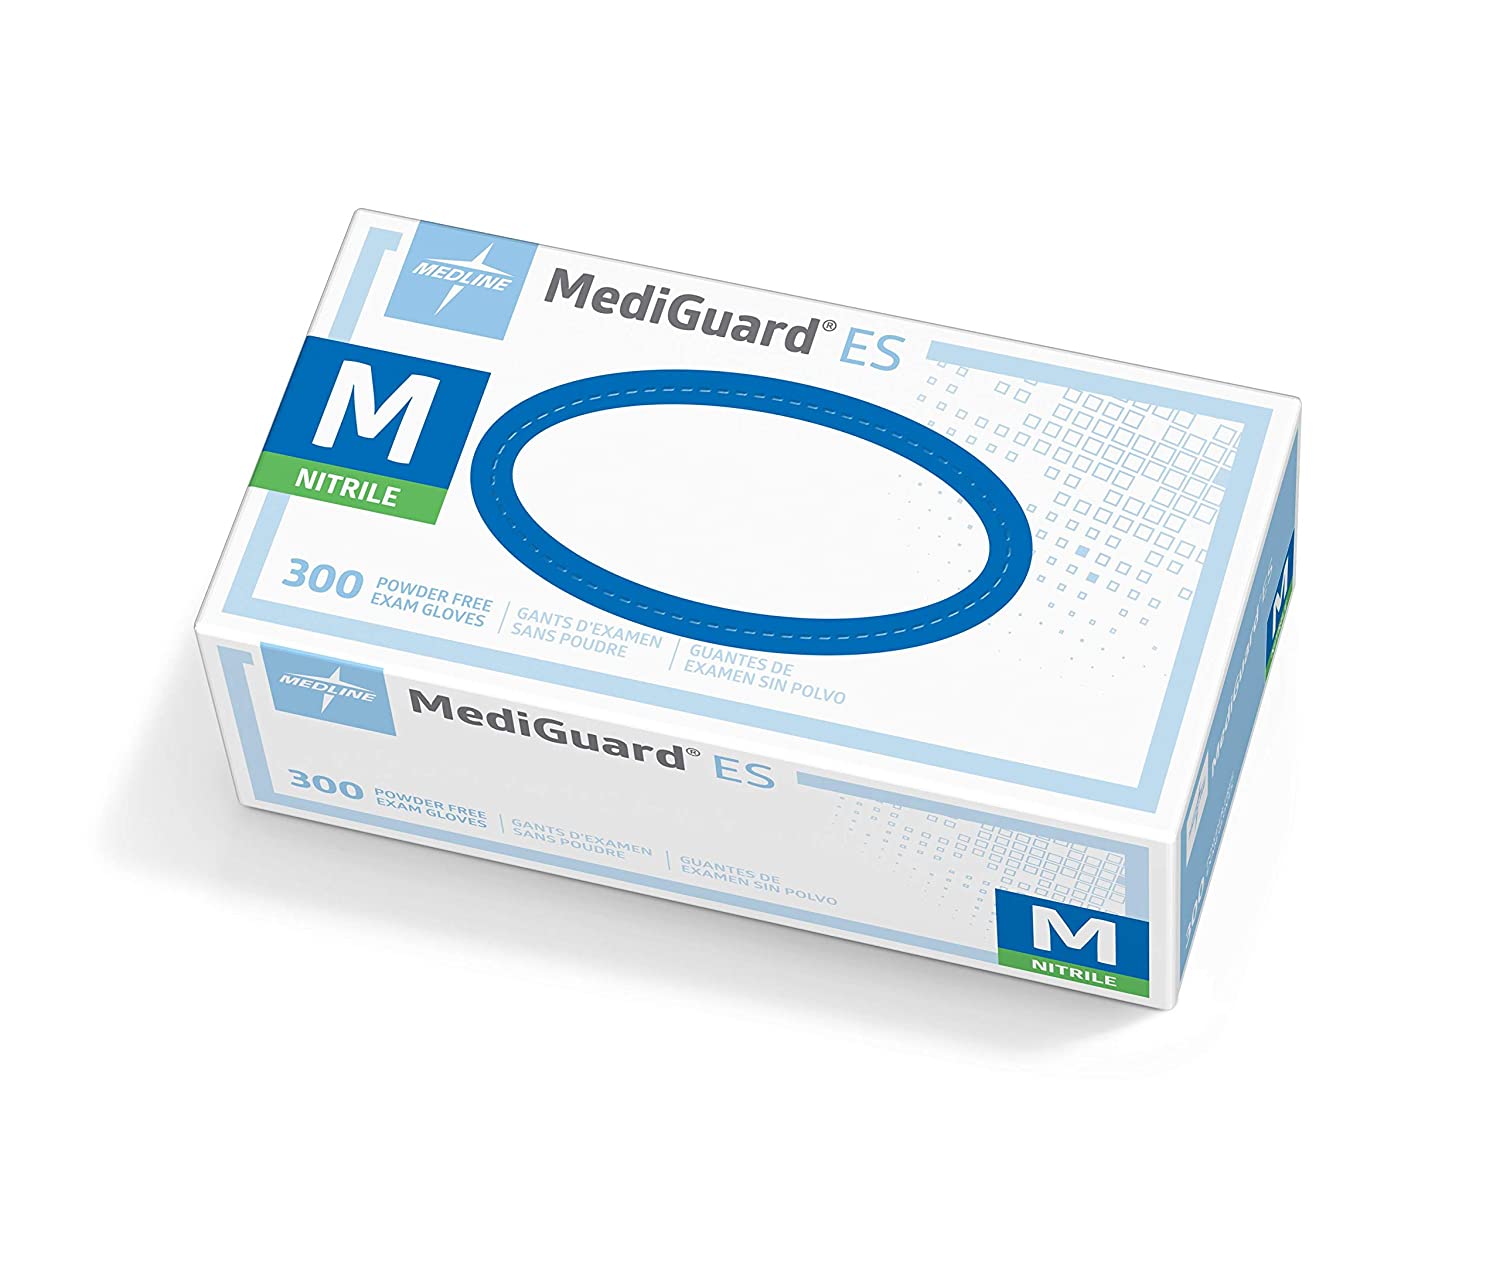 MediGuard ES MG3002 Powder Free, Nitrile Exam Gloves, Medium 300/bx